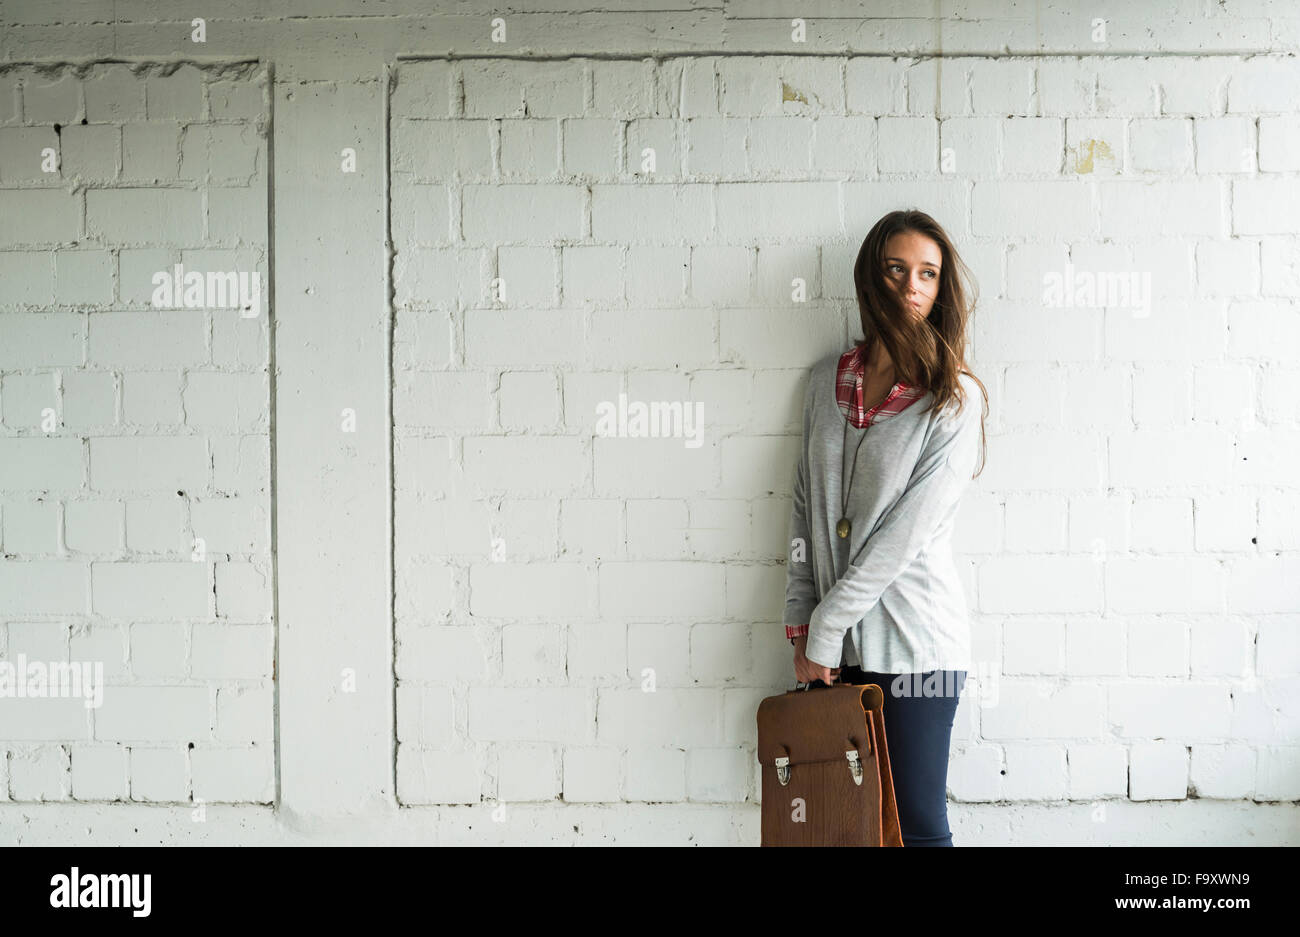 Young woman at brick wall holding satchel bag Stock Photo